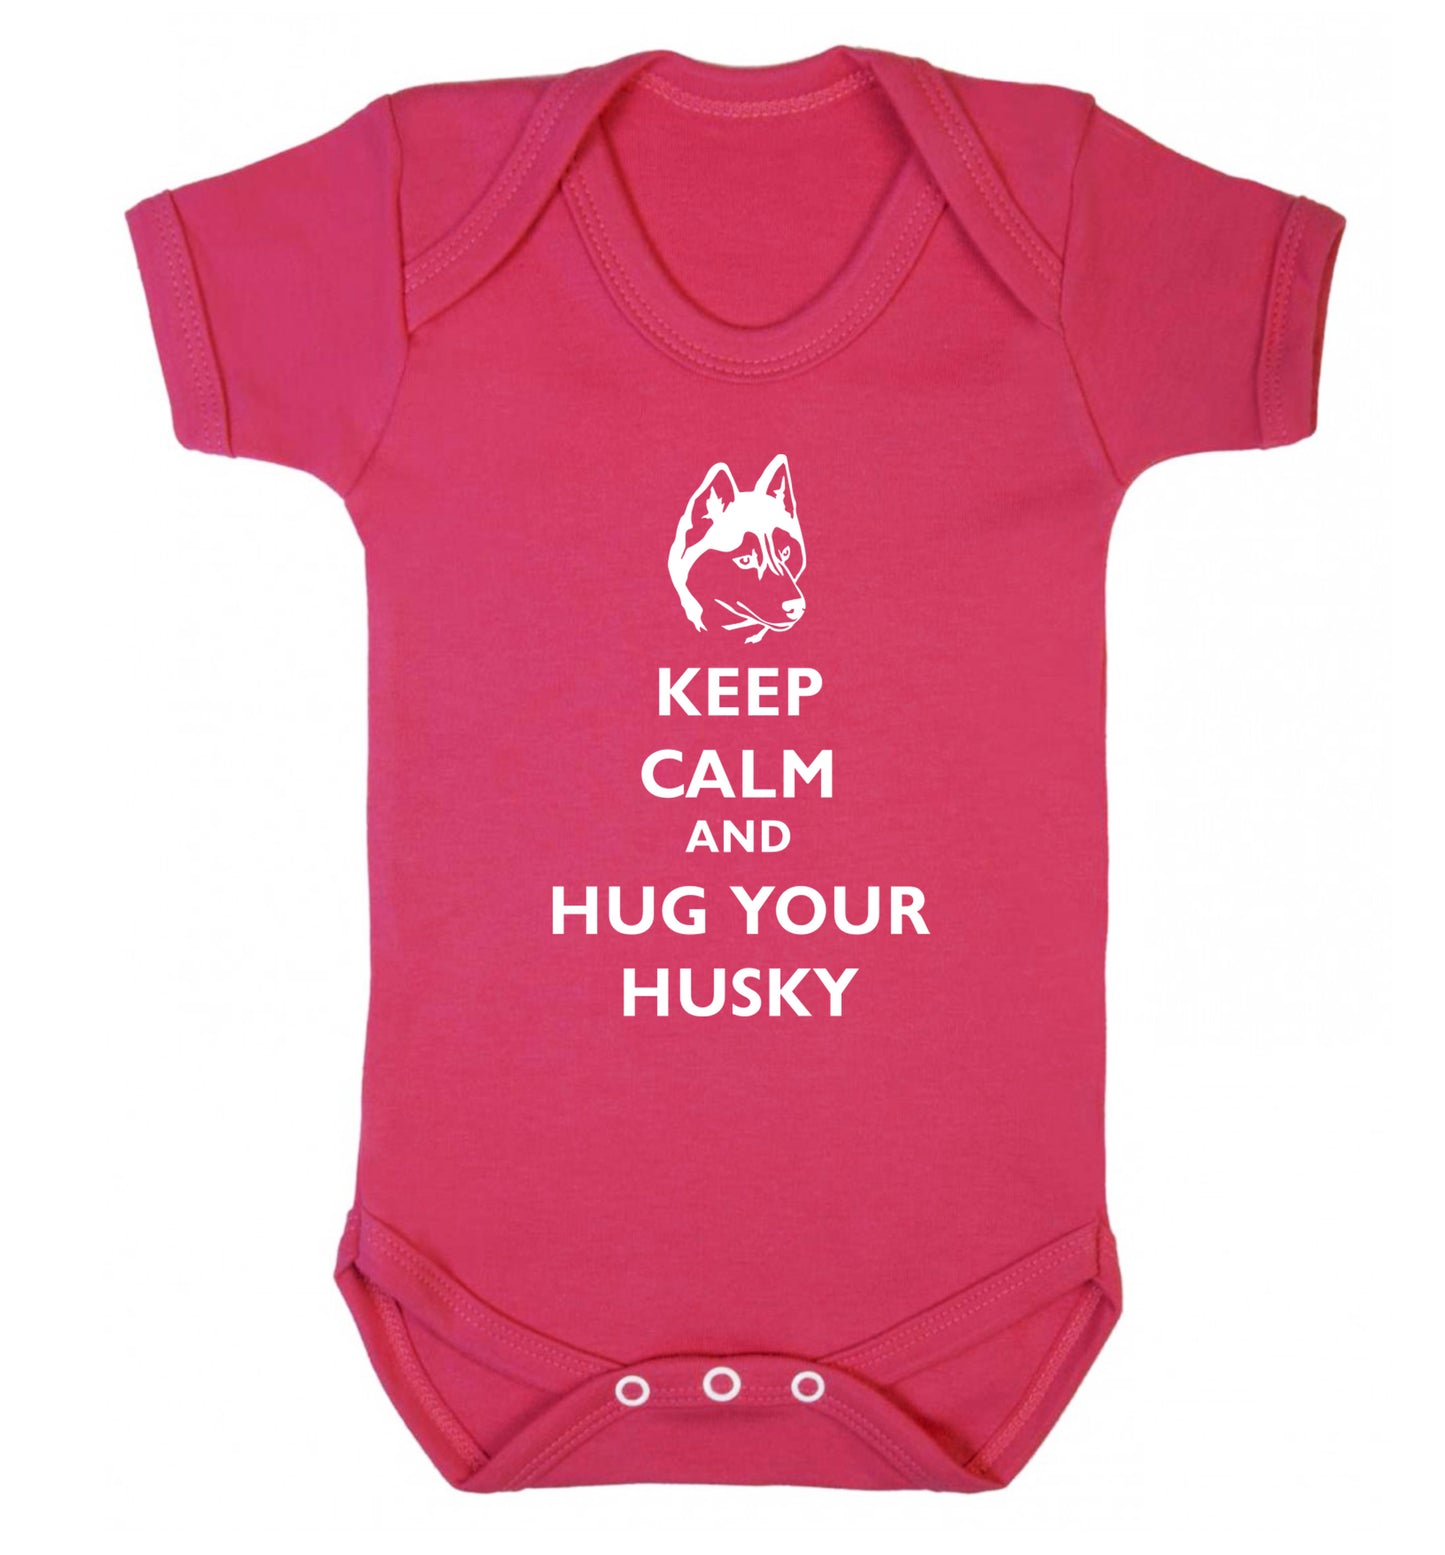 Keep calm and hug your husky Baby Vest dark pink 18-24 months